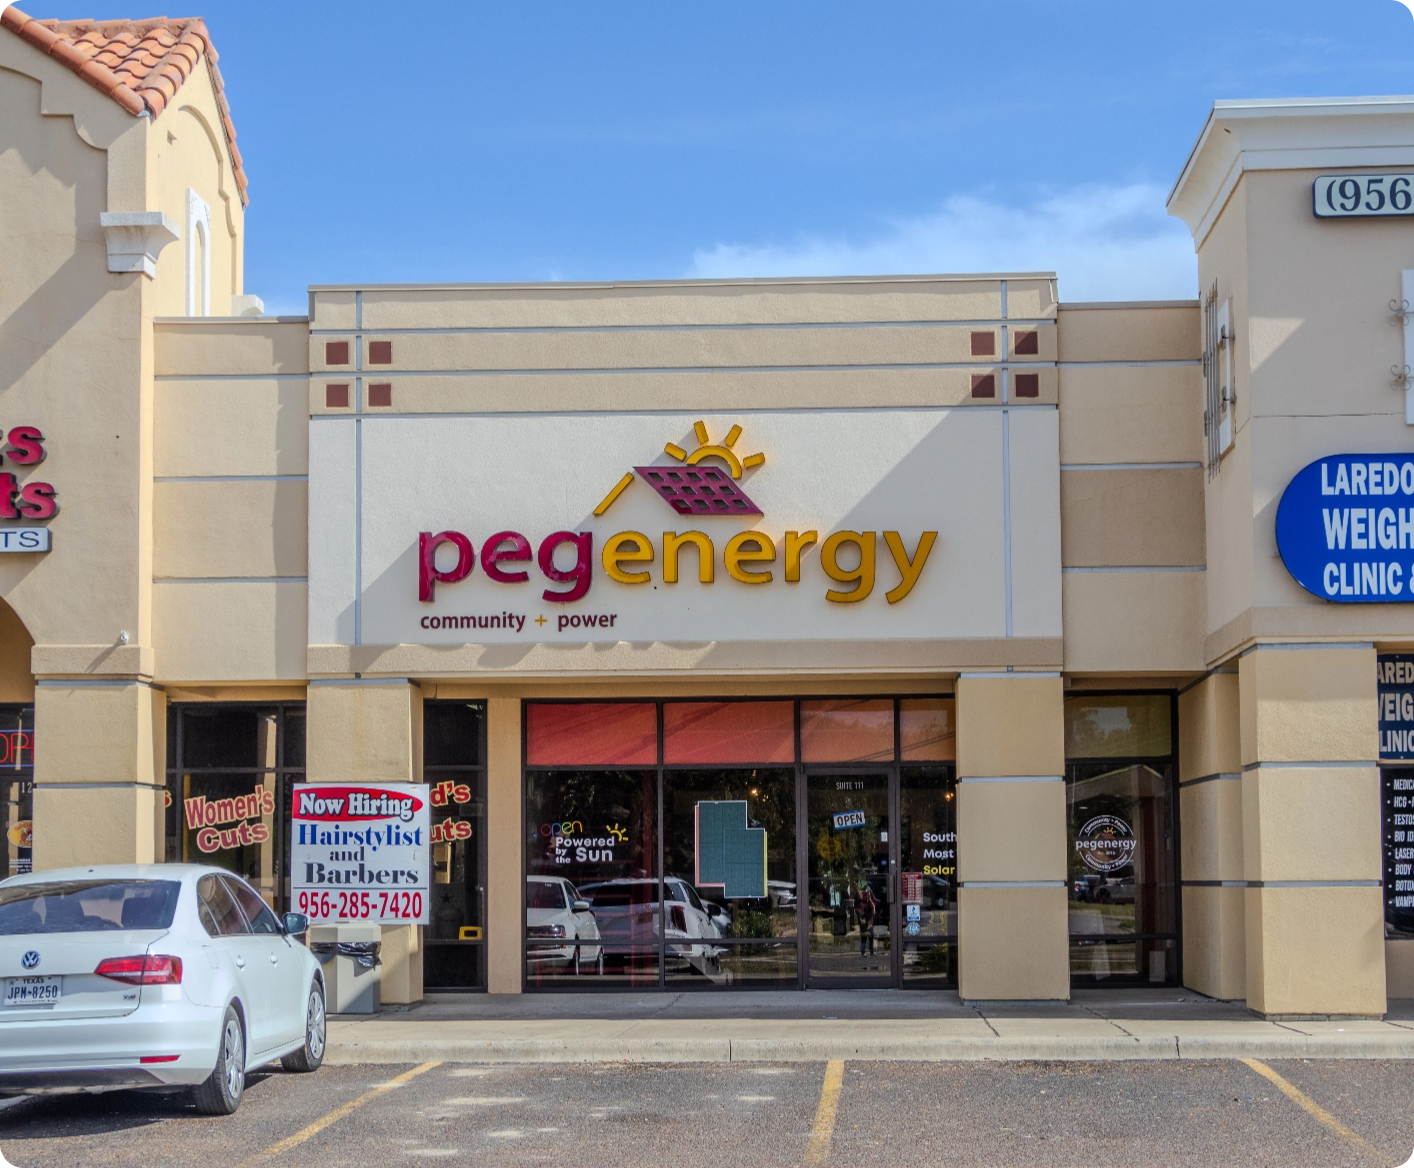 PEG Energy location in Laredo Texas